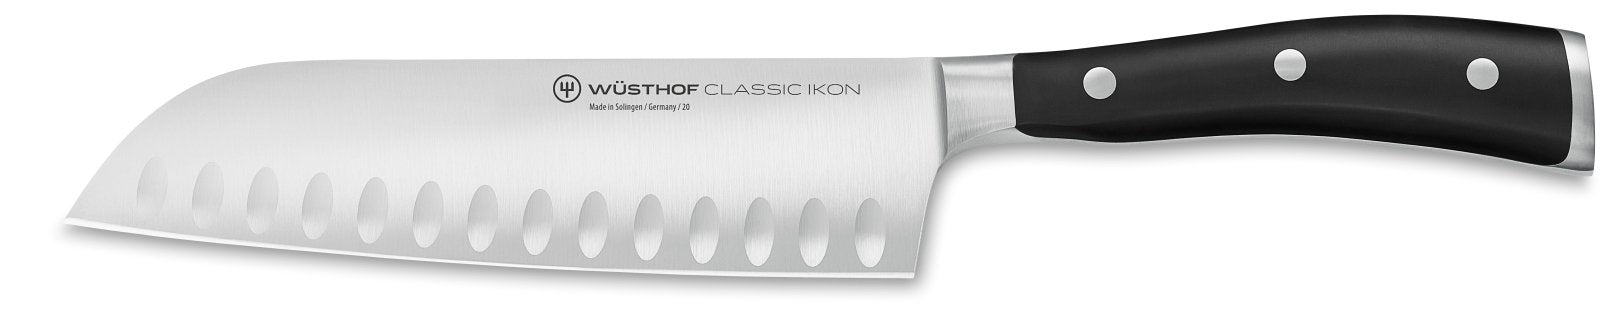 Wusthof Classic IKON 2 Piece Set - WT1120360201 - The Cotswold Knife Company